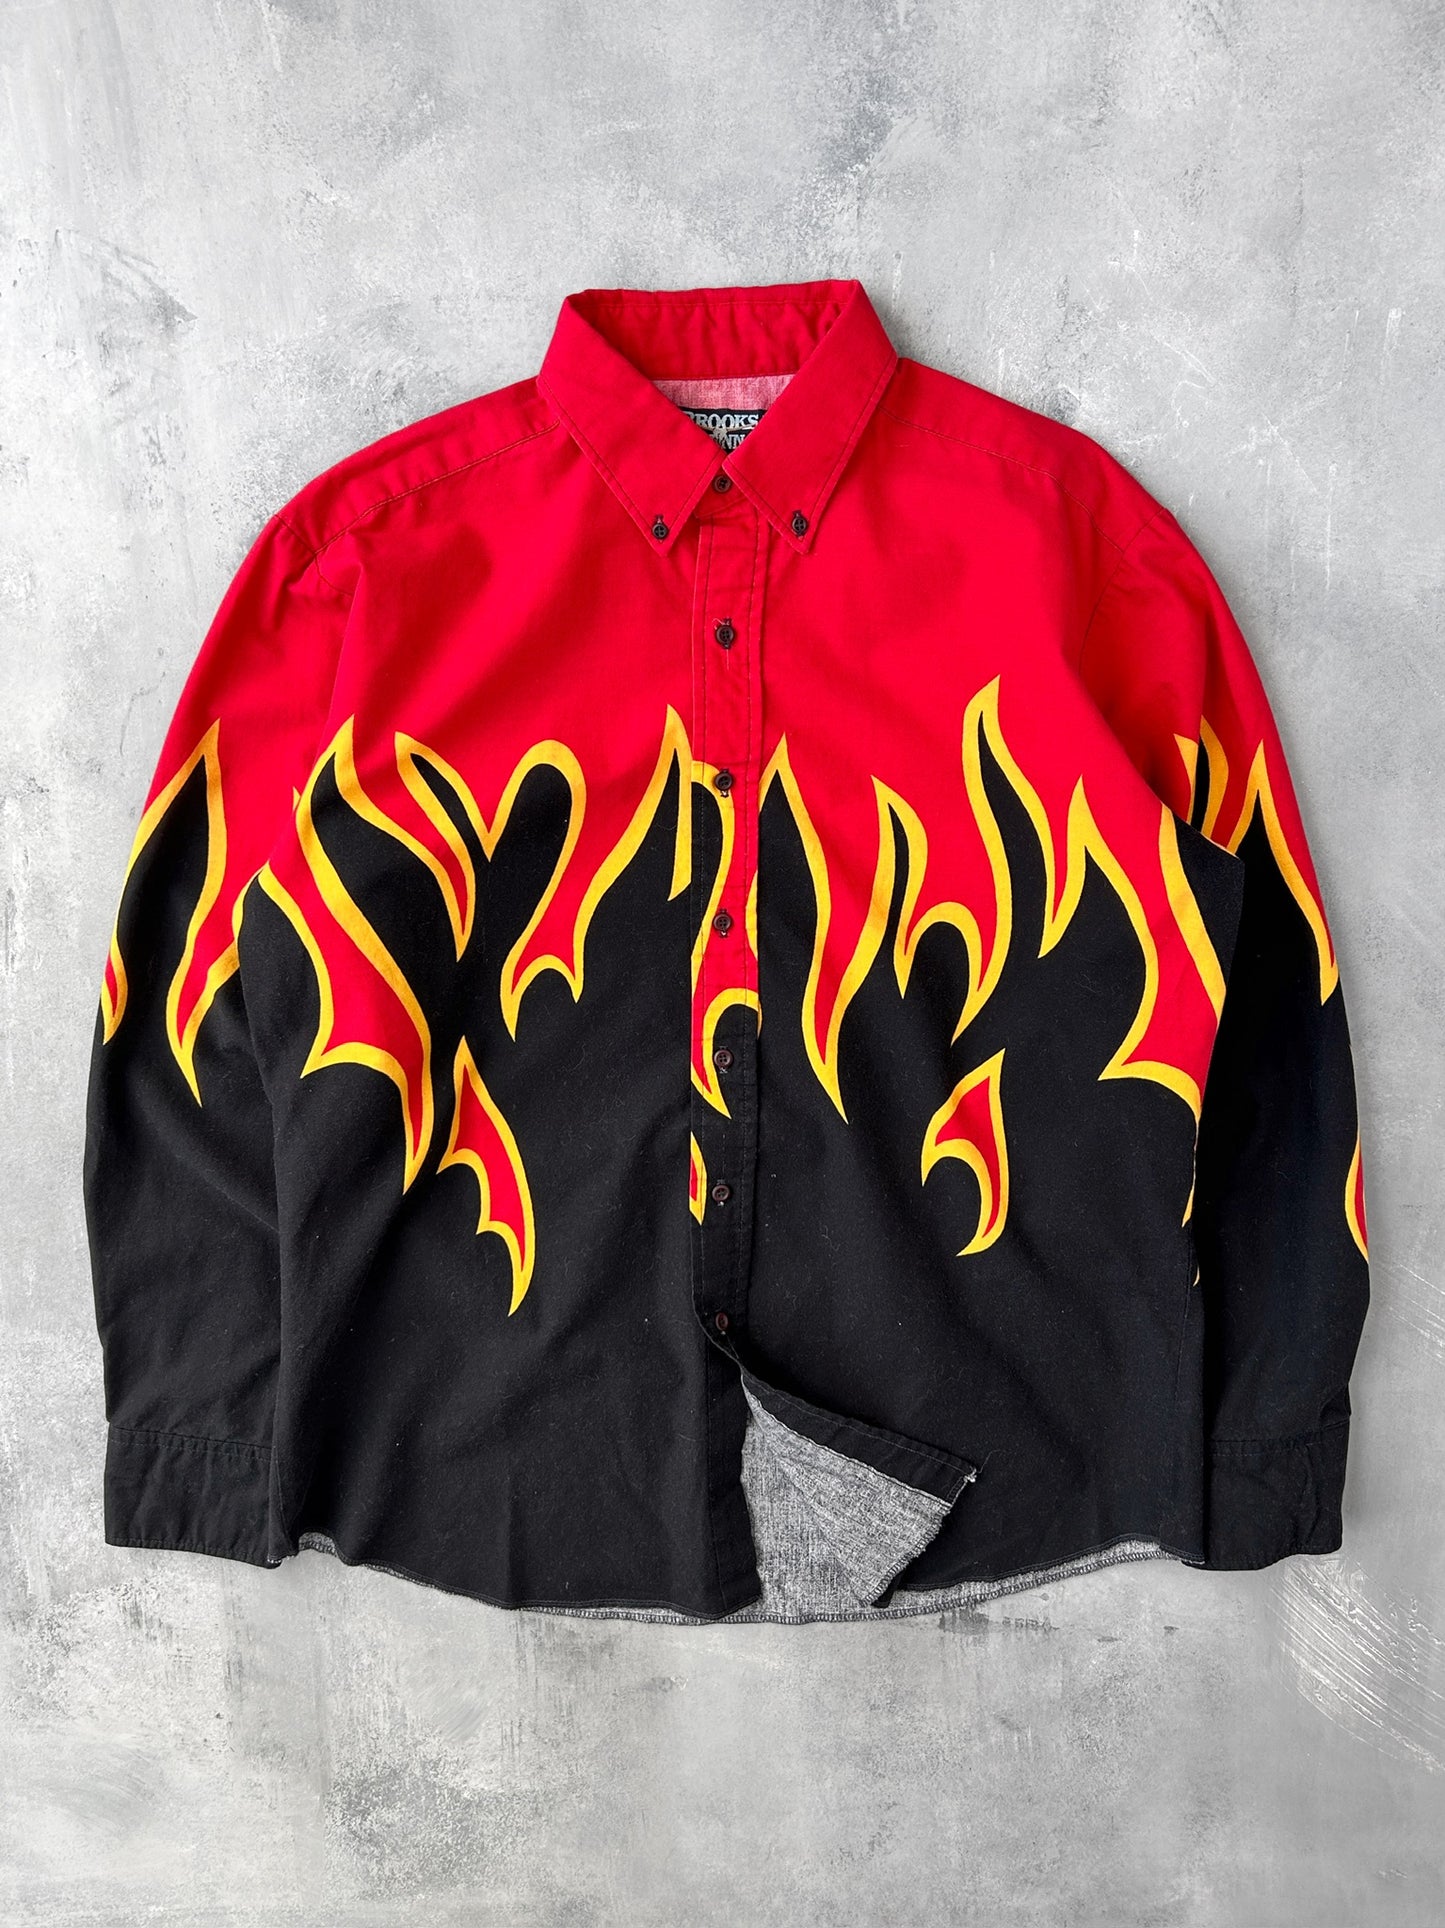 Brooks & Dunn Flame Shirt 90's - Large